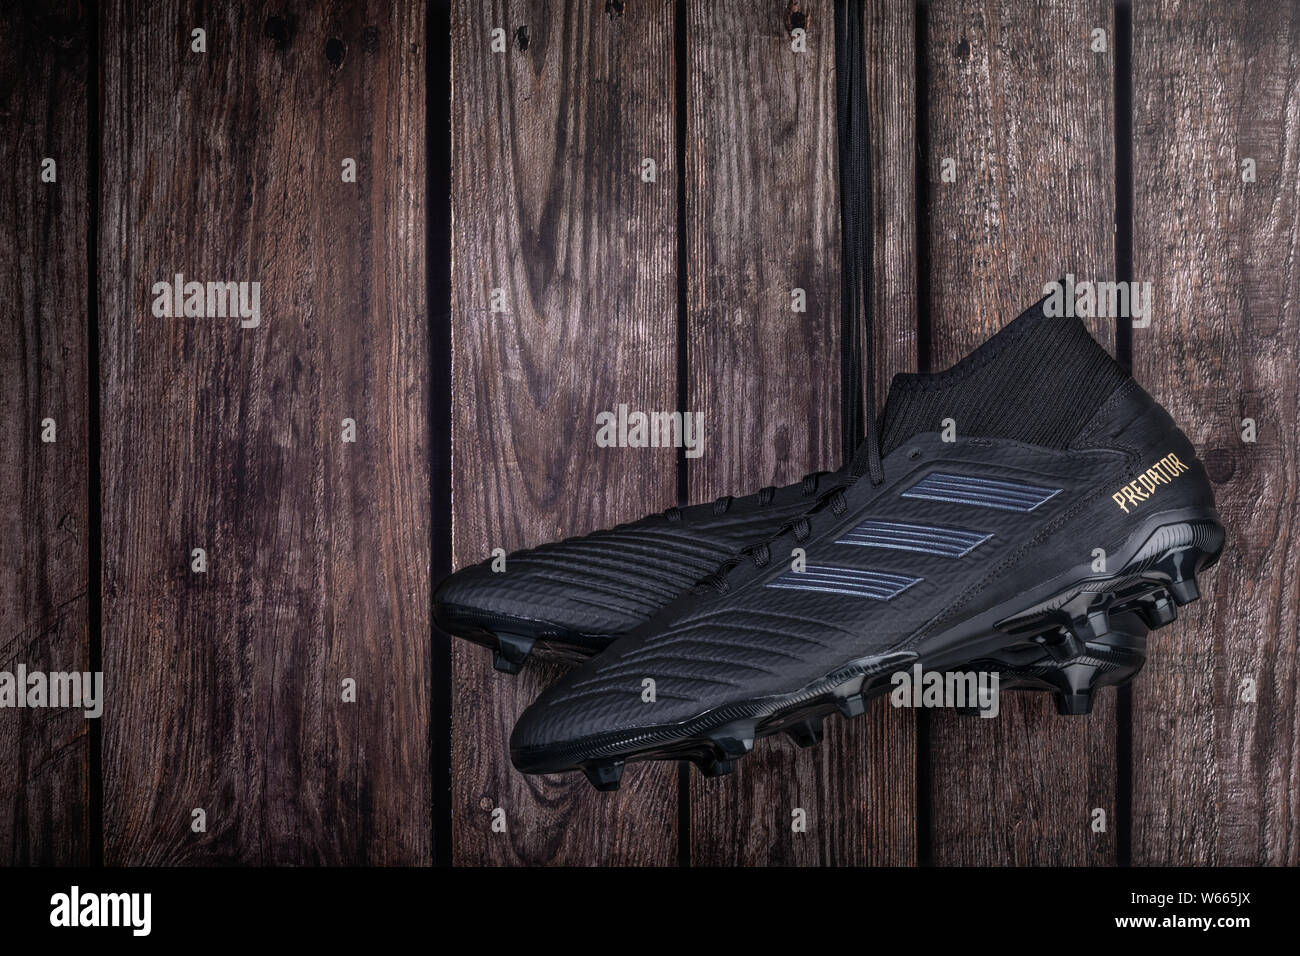 Calzado de fútbol adidas fotografías e imágenes de alta resolución - Alamy